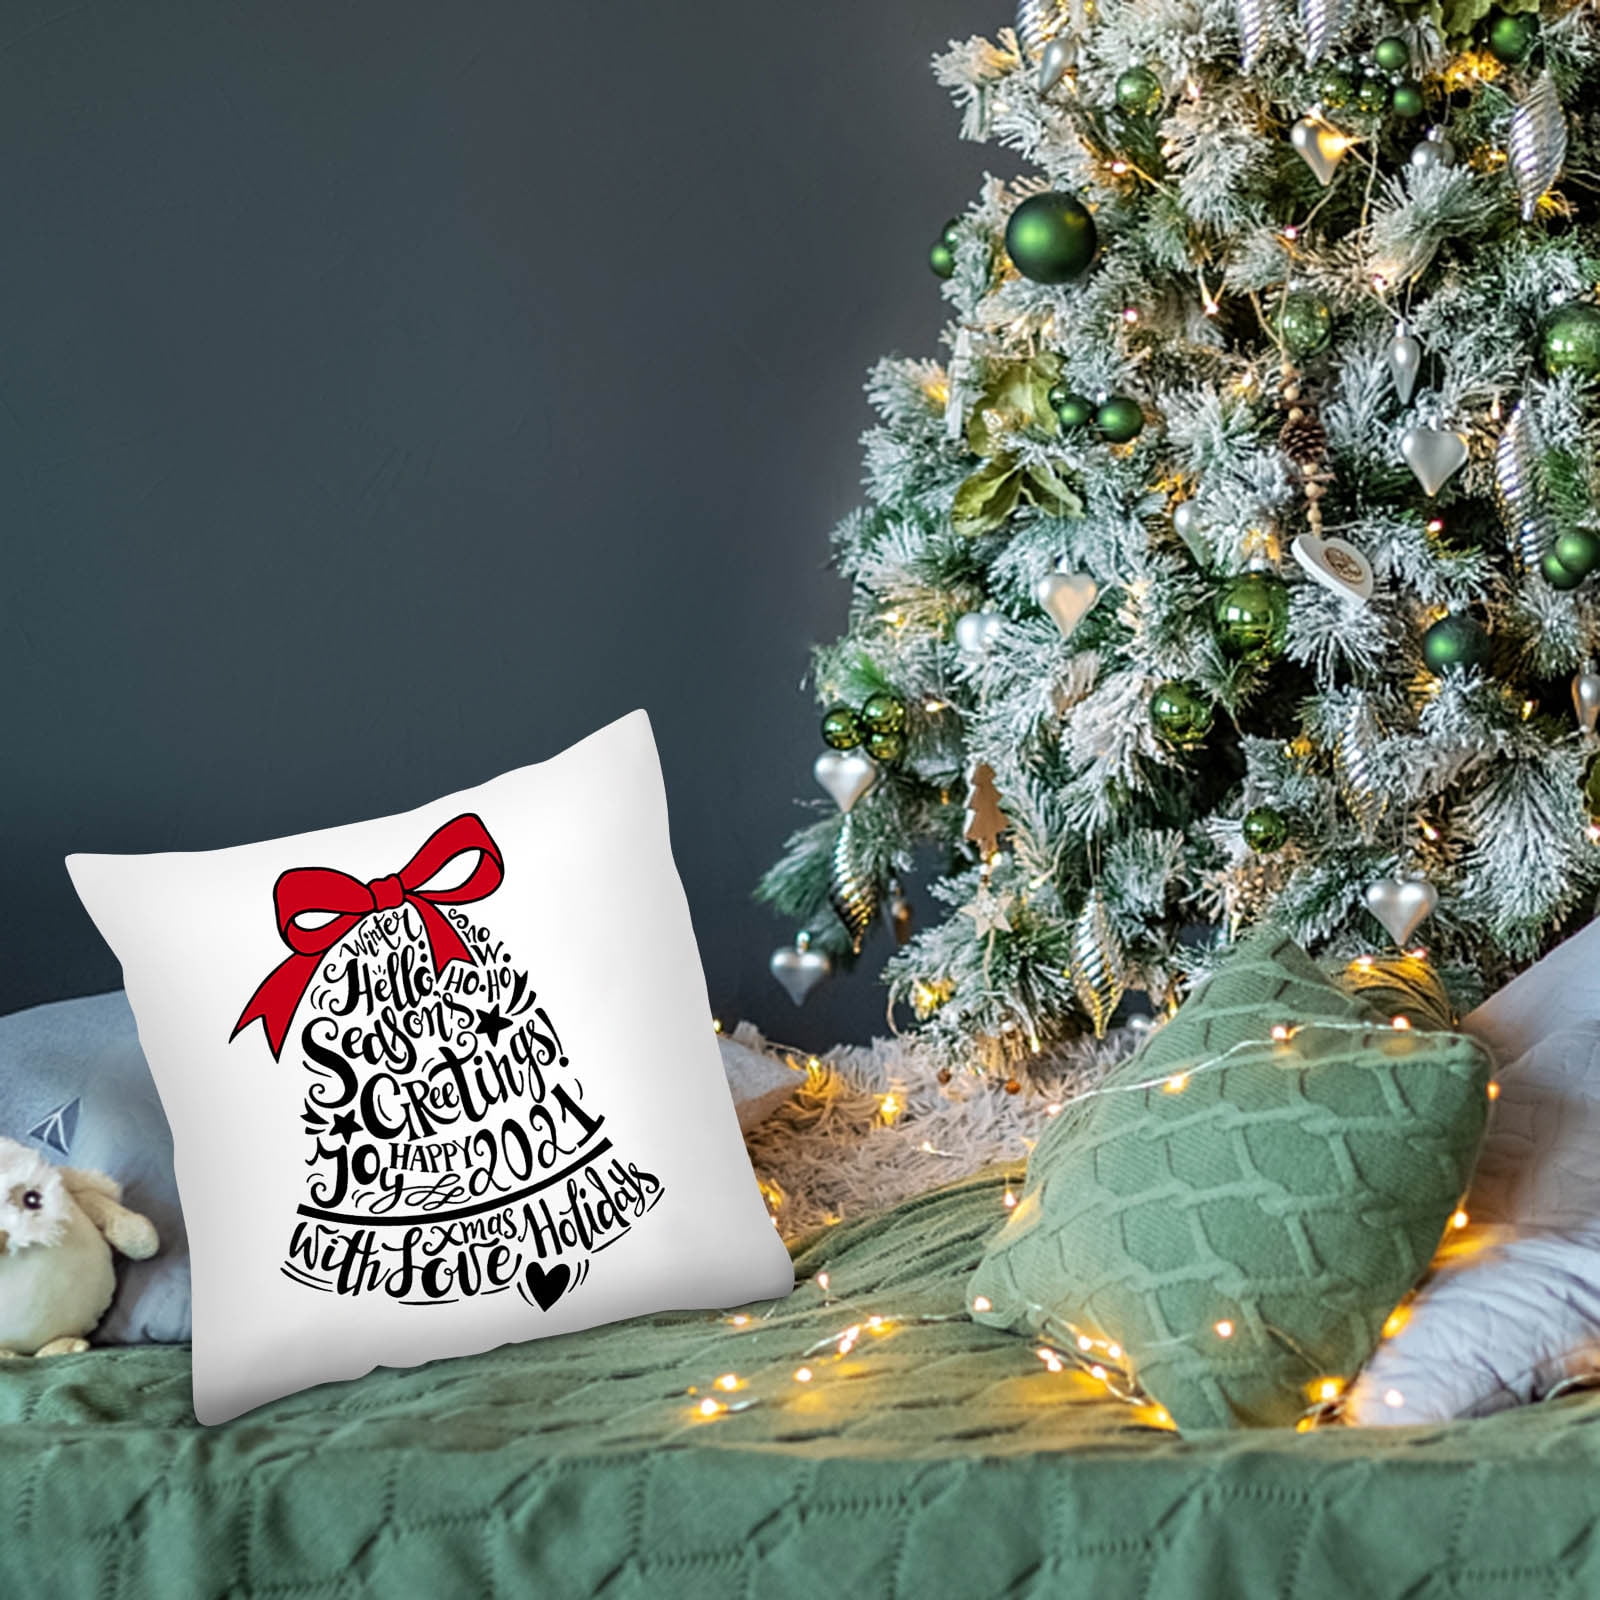 Christmas Tree Pillow Cover. – Porter Lane Home